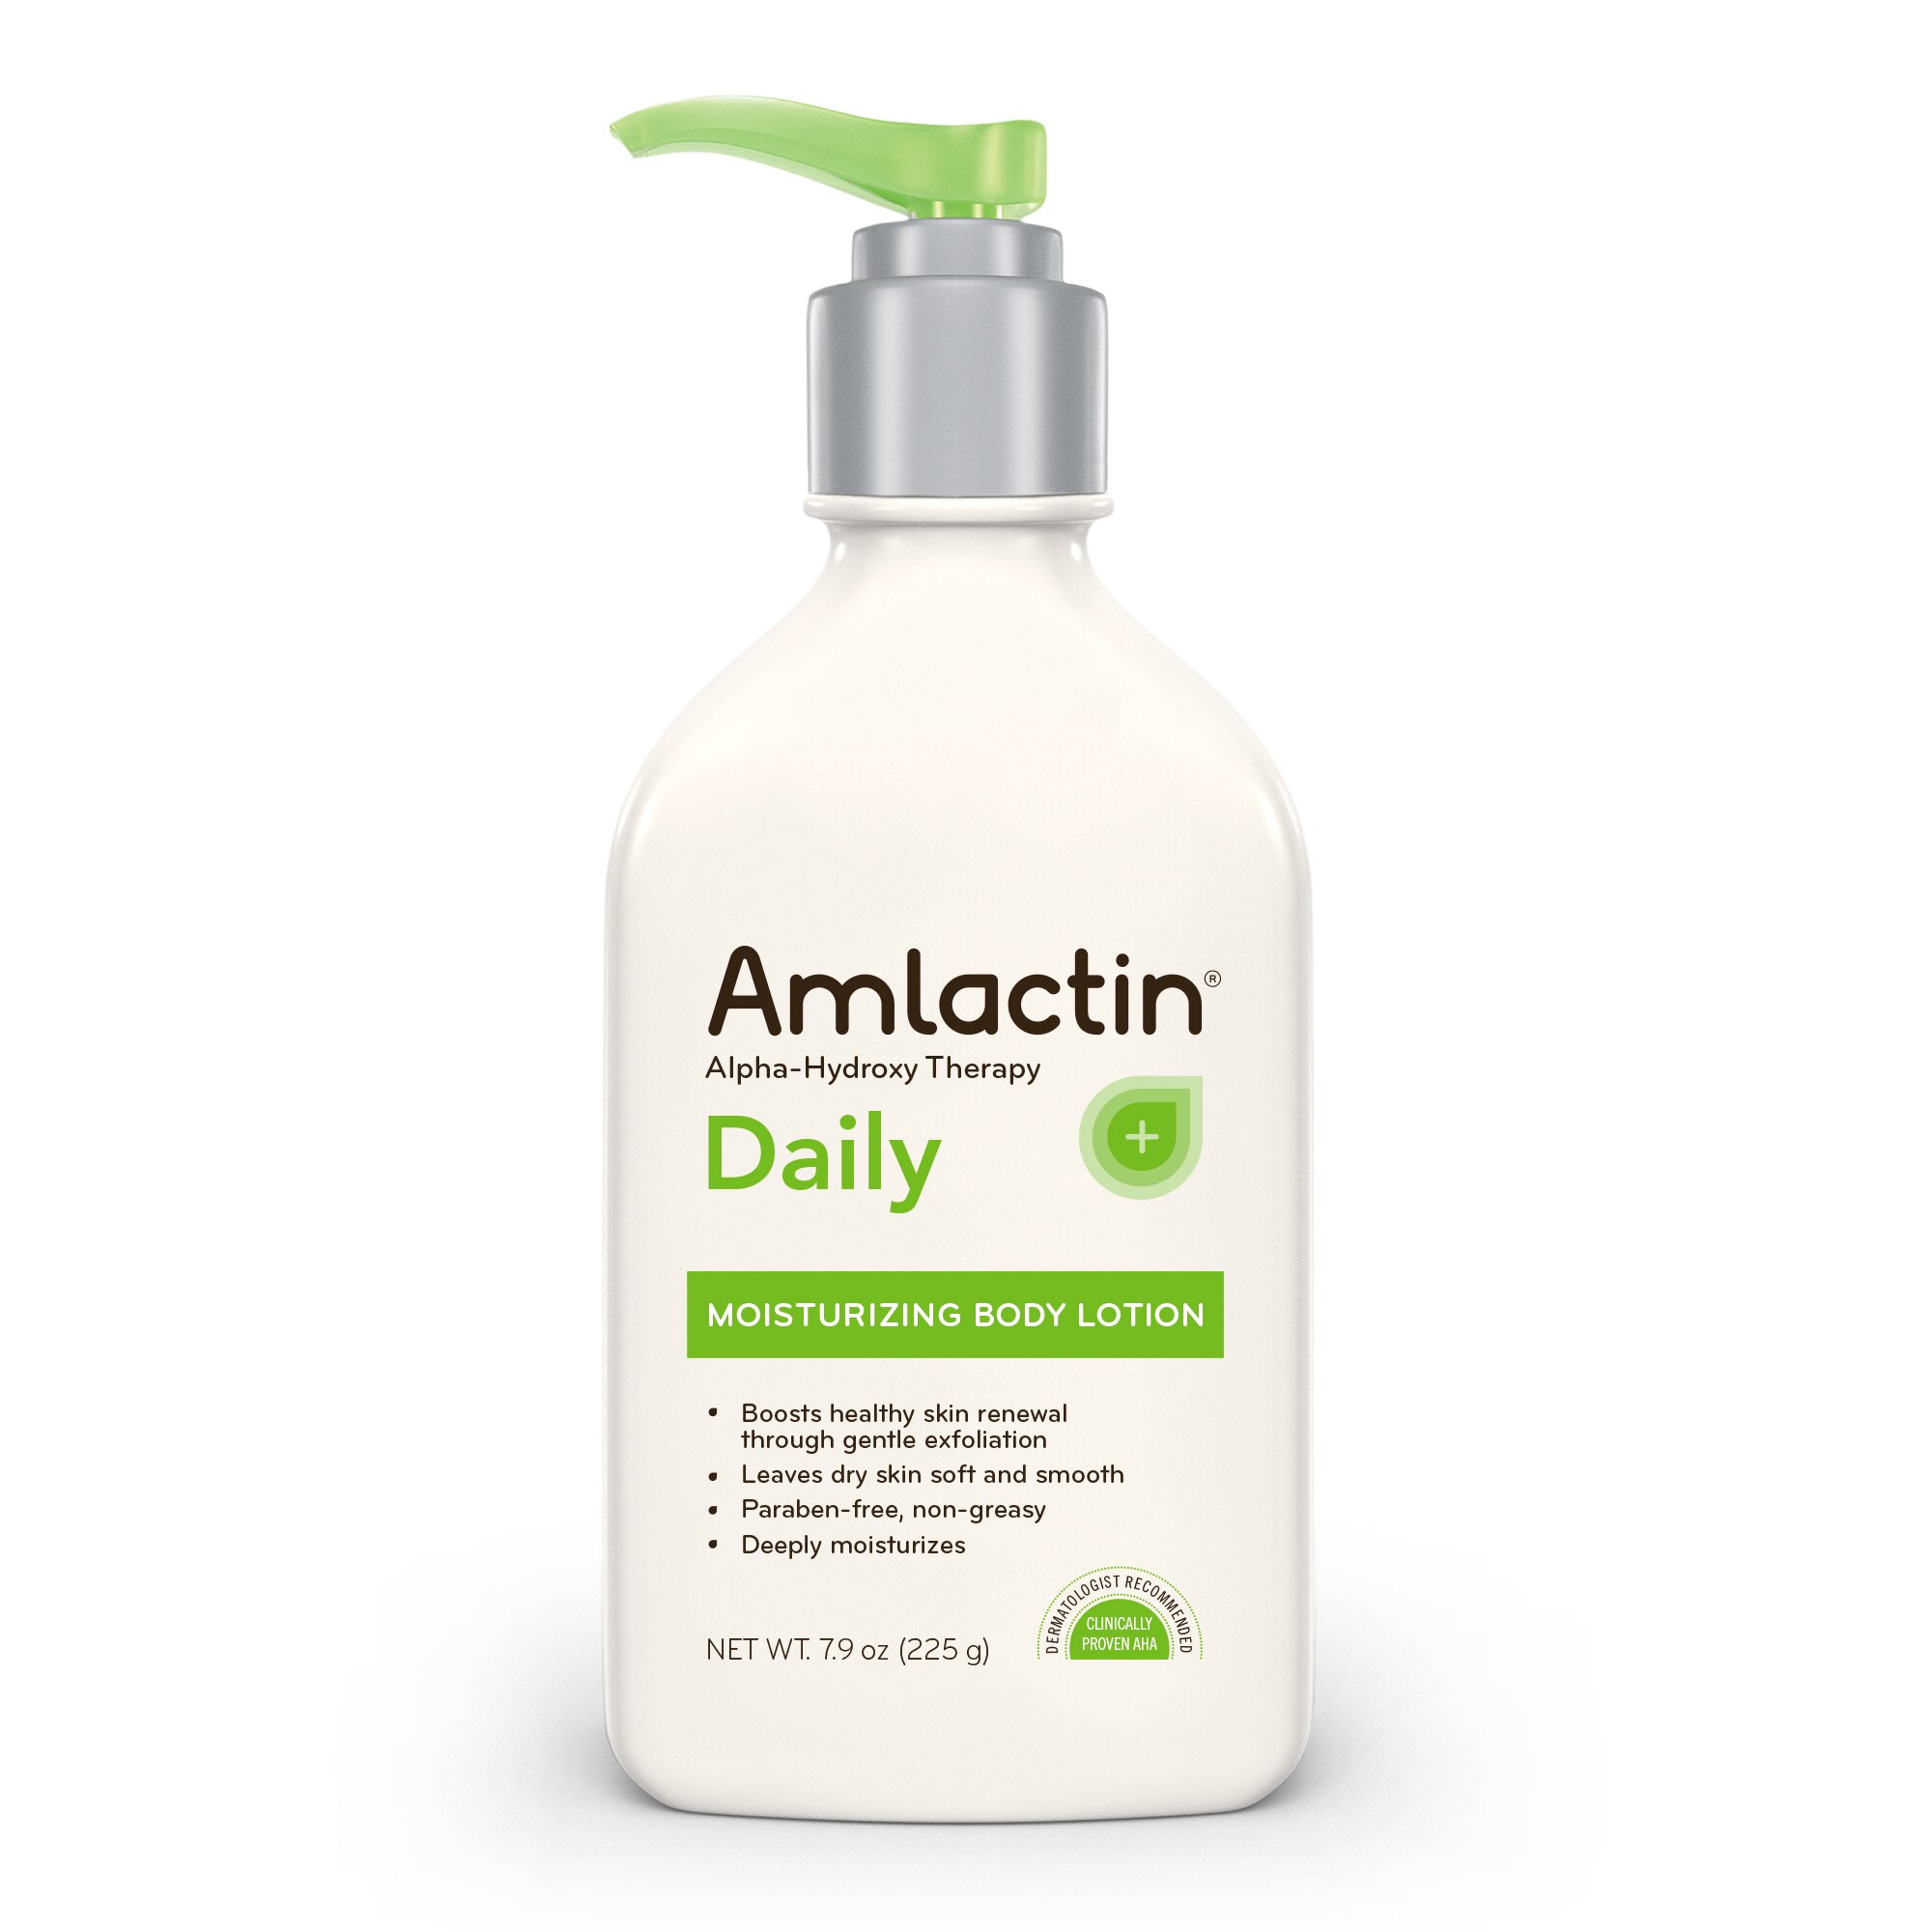 AmLactin Daily Moisturizing Body Lotion, Paraben-Free